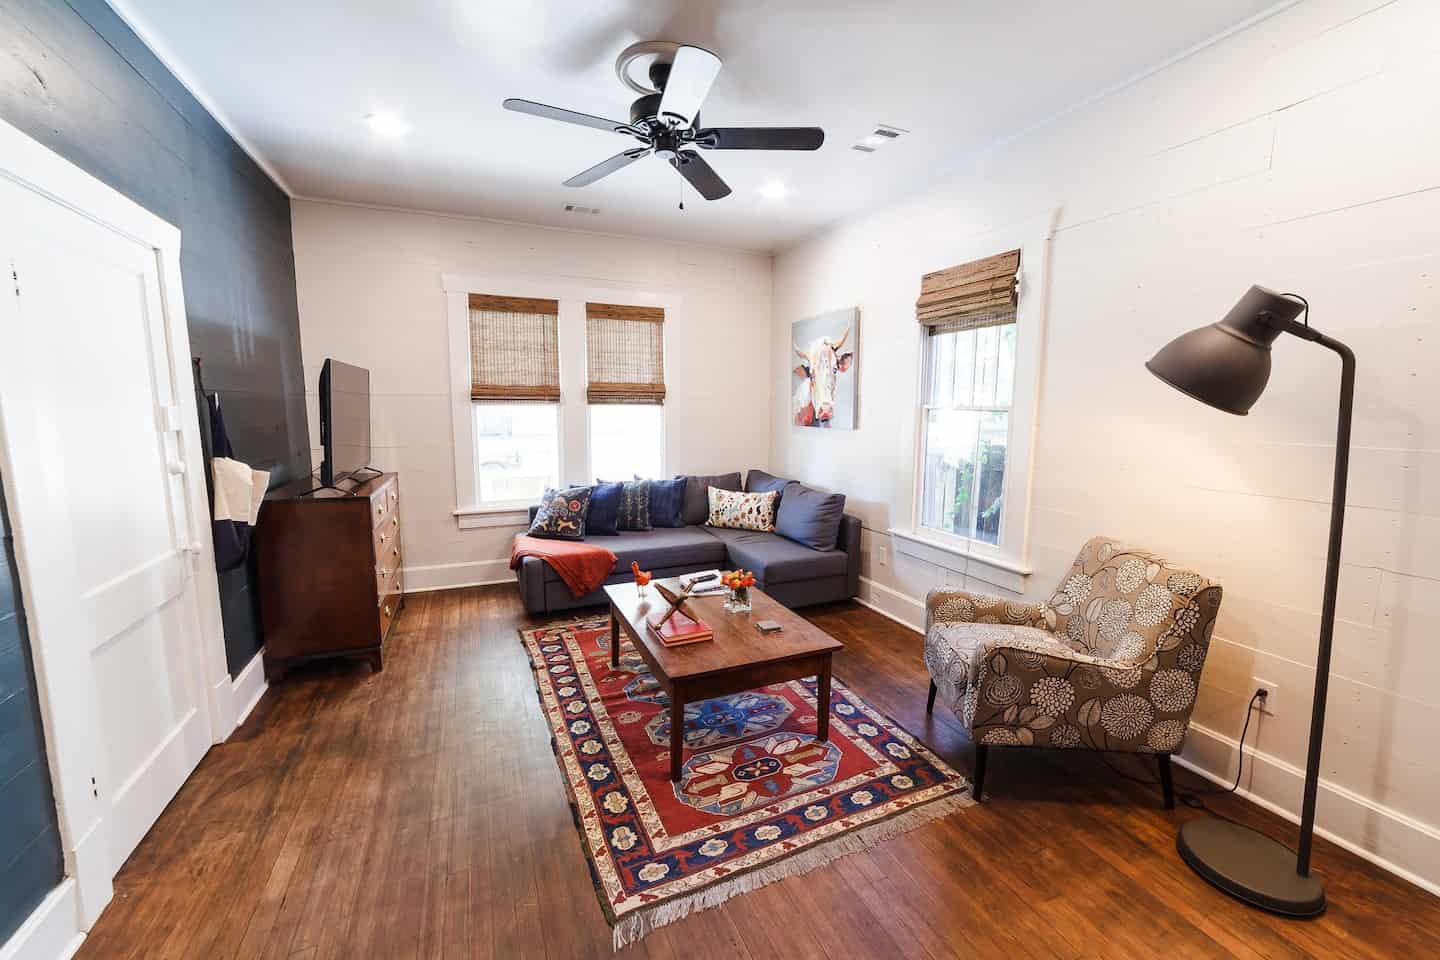 Image of Airbnb rental in Columbus, Georgia